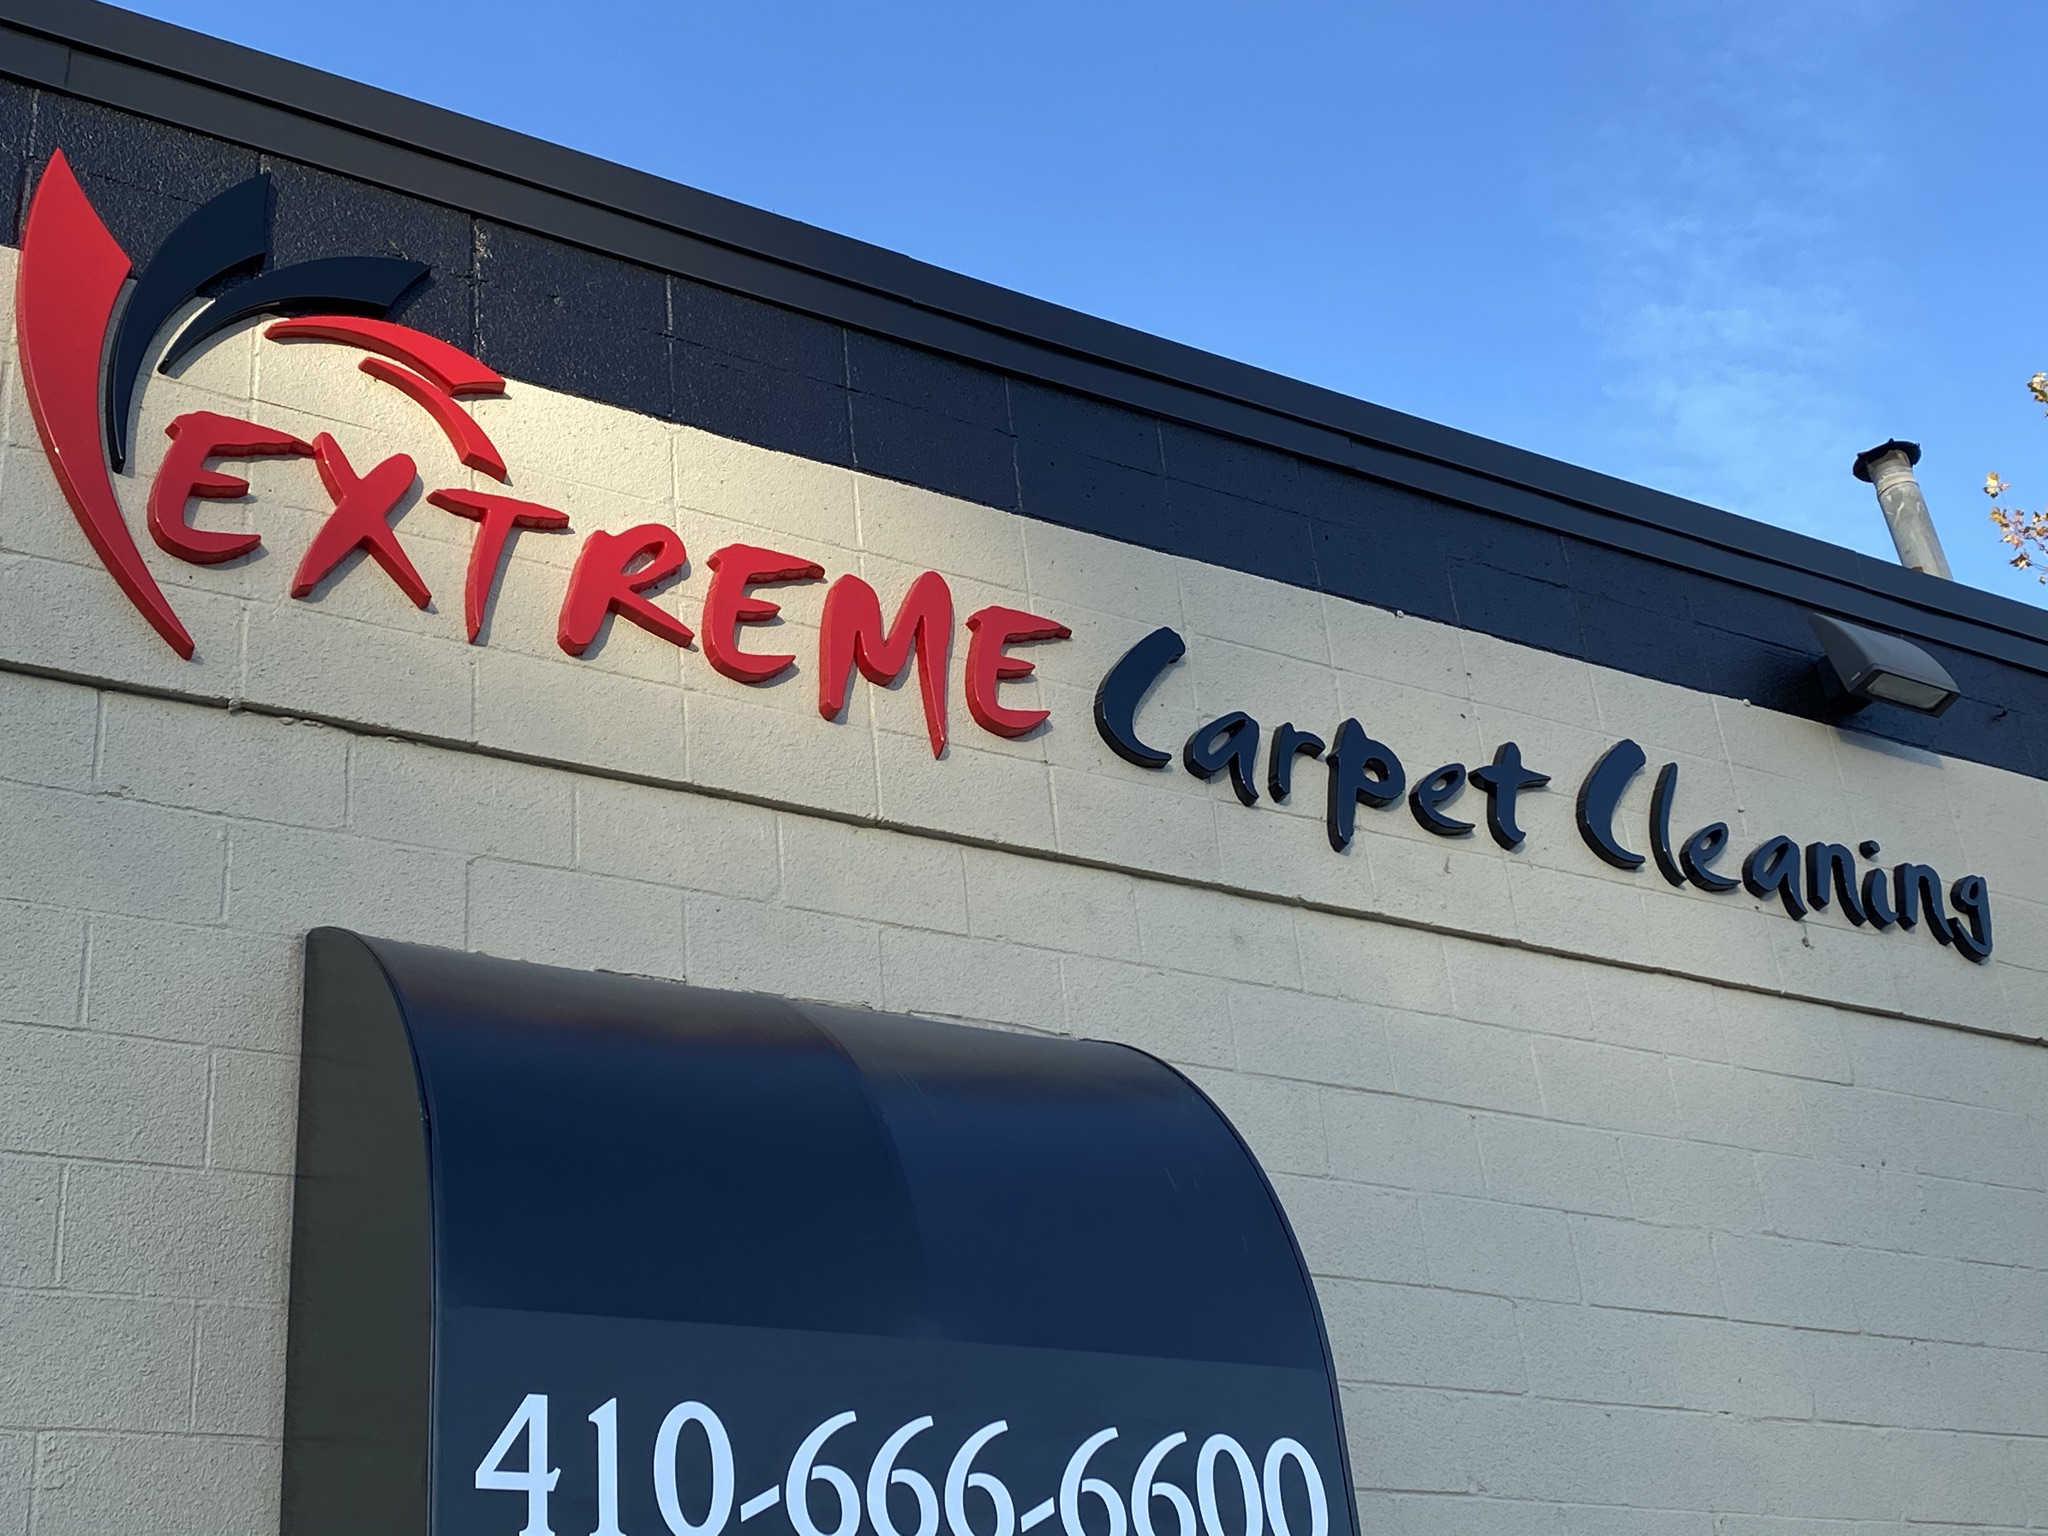 Extreme Carpet Cleaning Storefront Signage